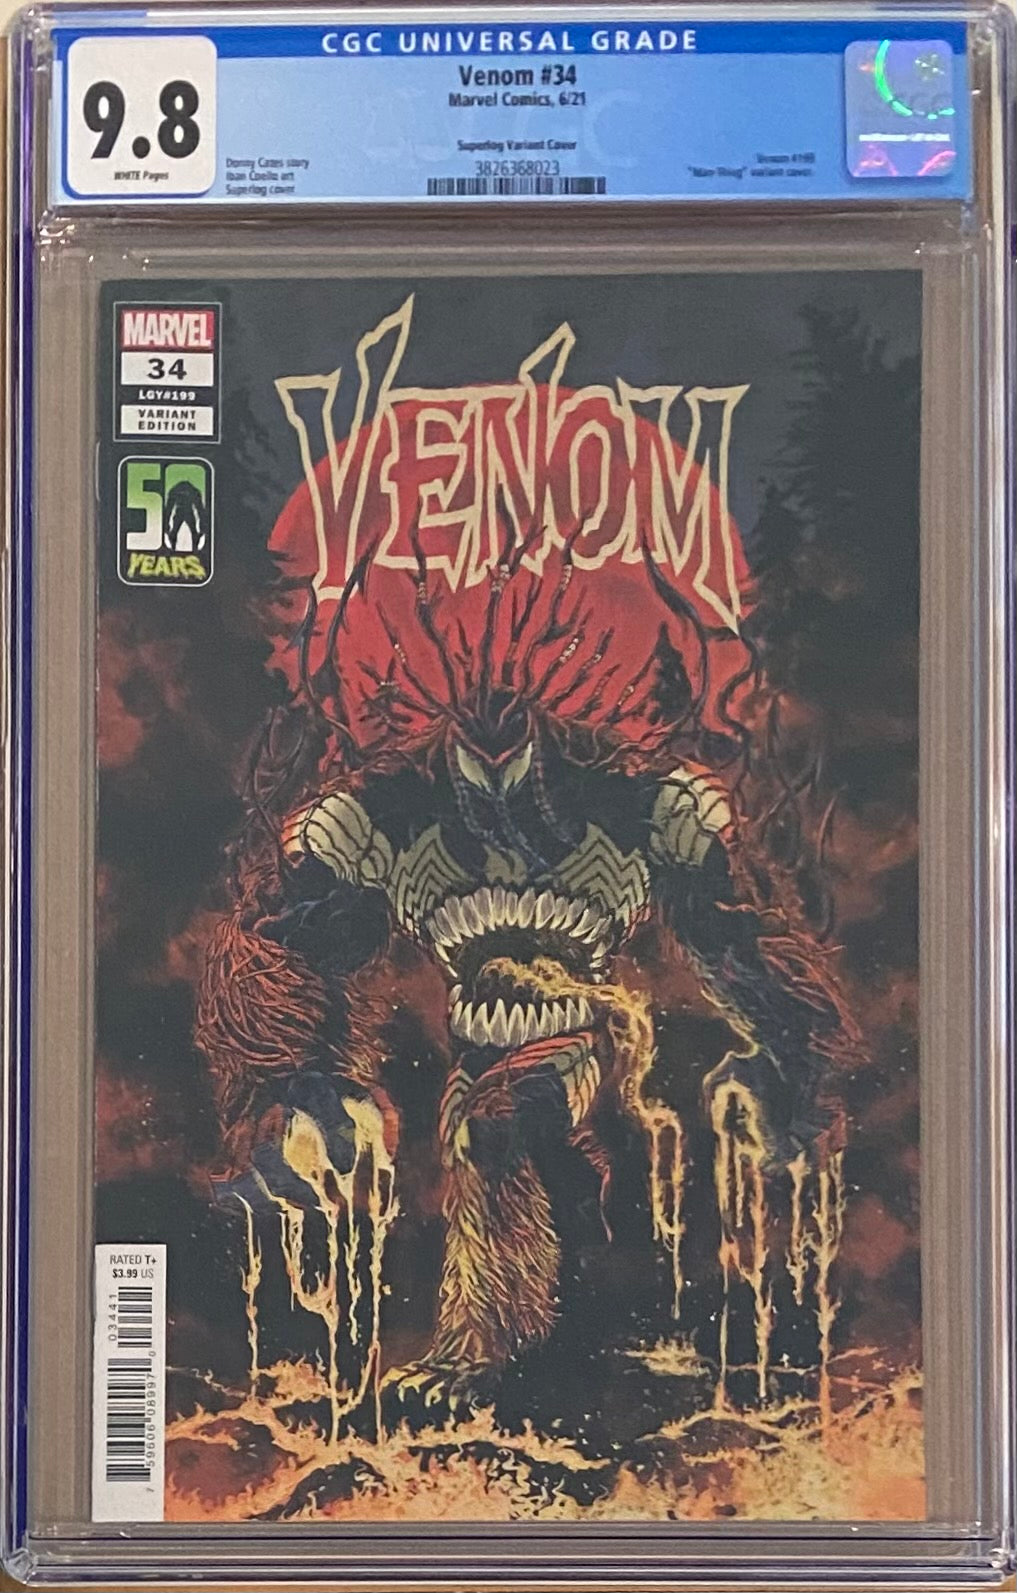 Venom #34 Superlog "Venom-Thing" Variant CGC 9.8